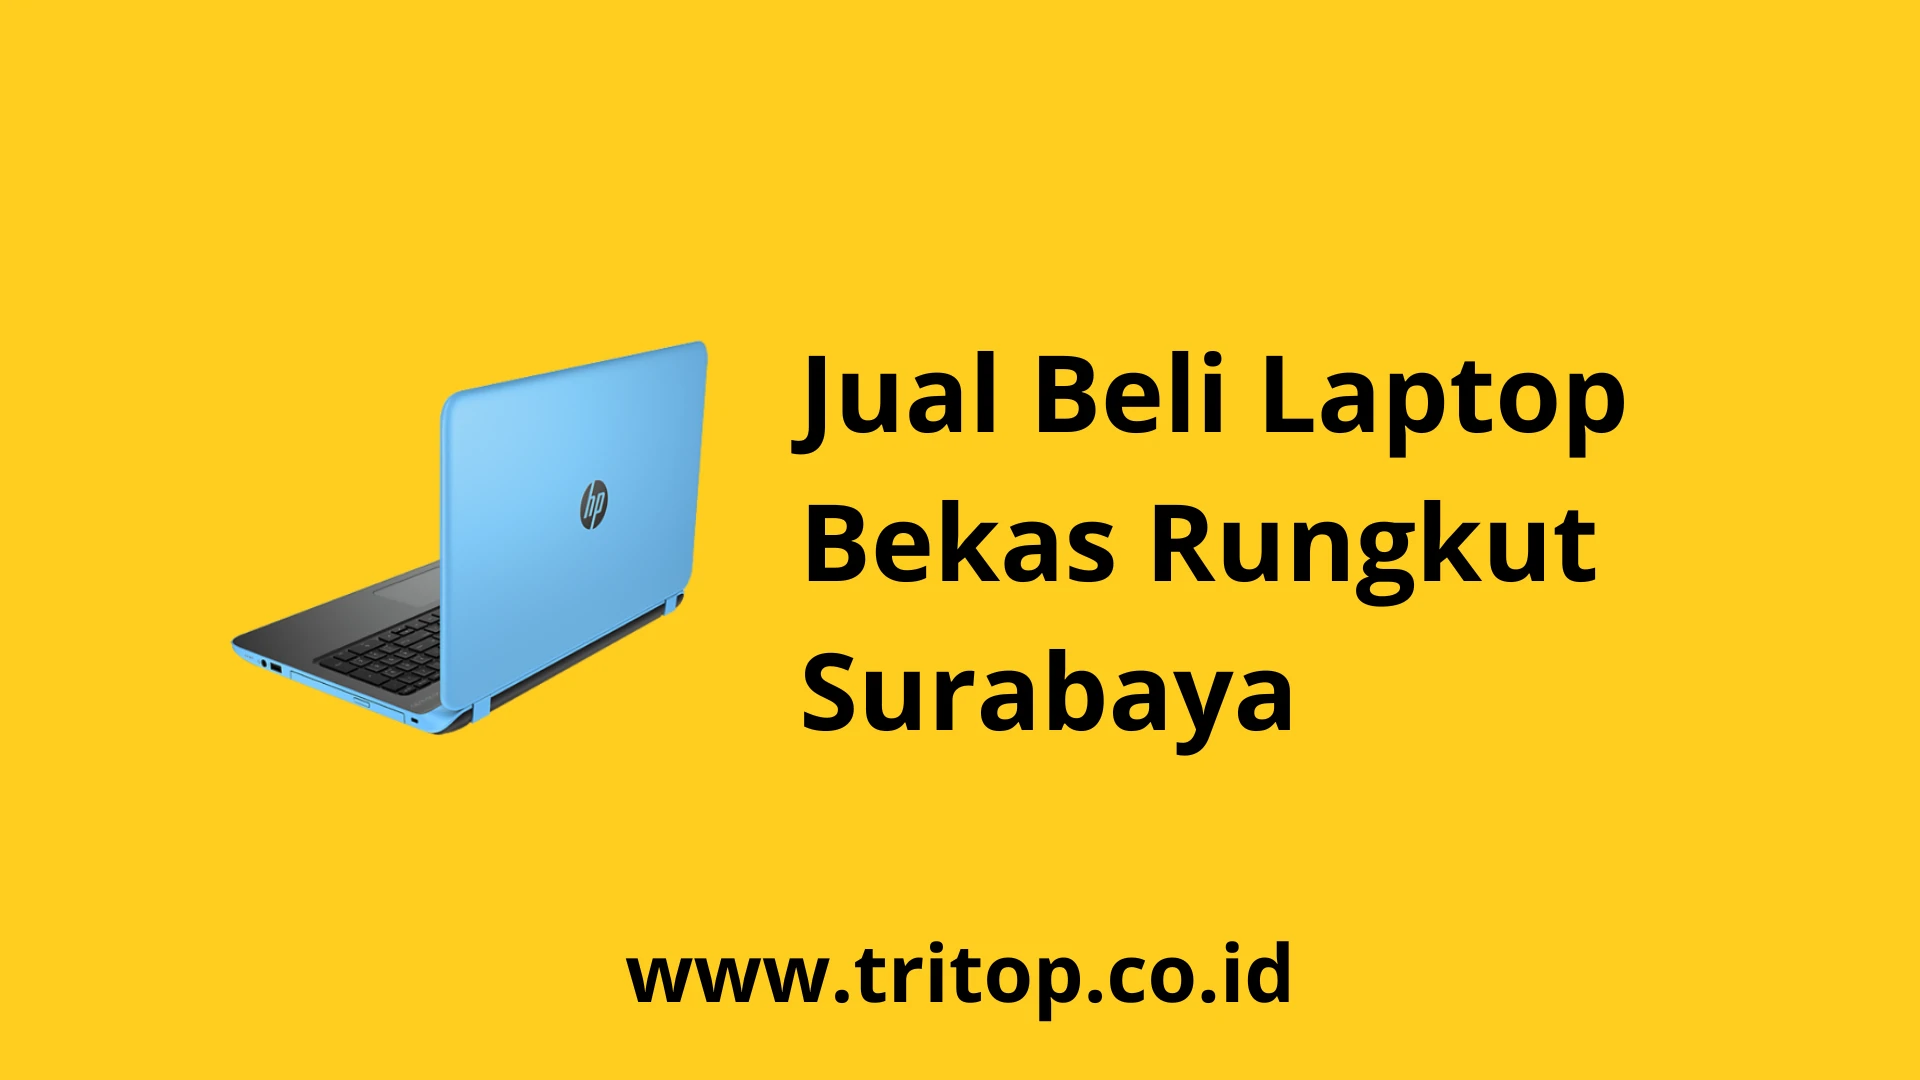 Jual Beli Laptop Bekas Rungkut Surabaya